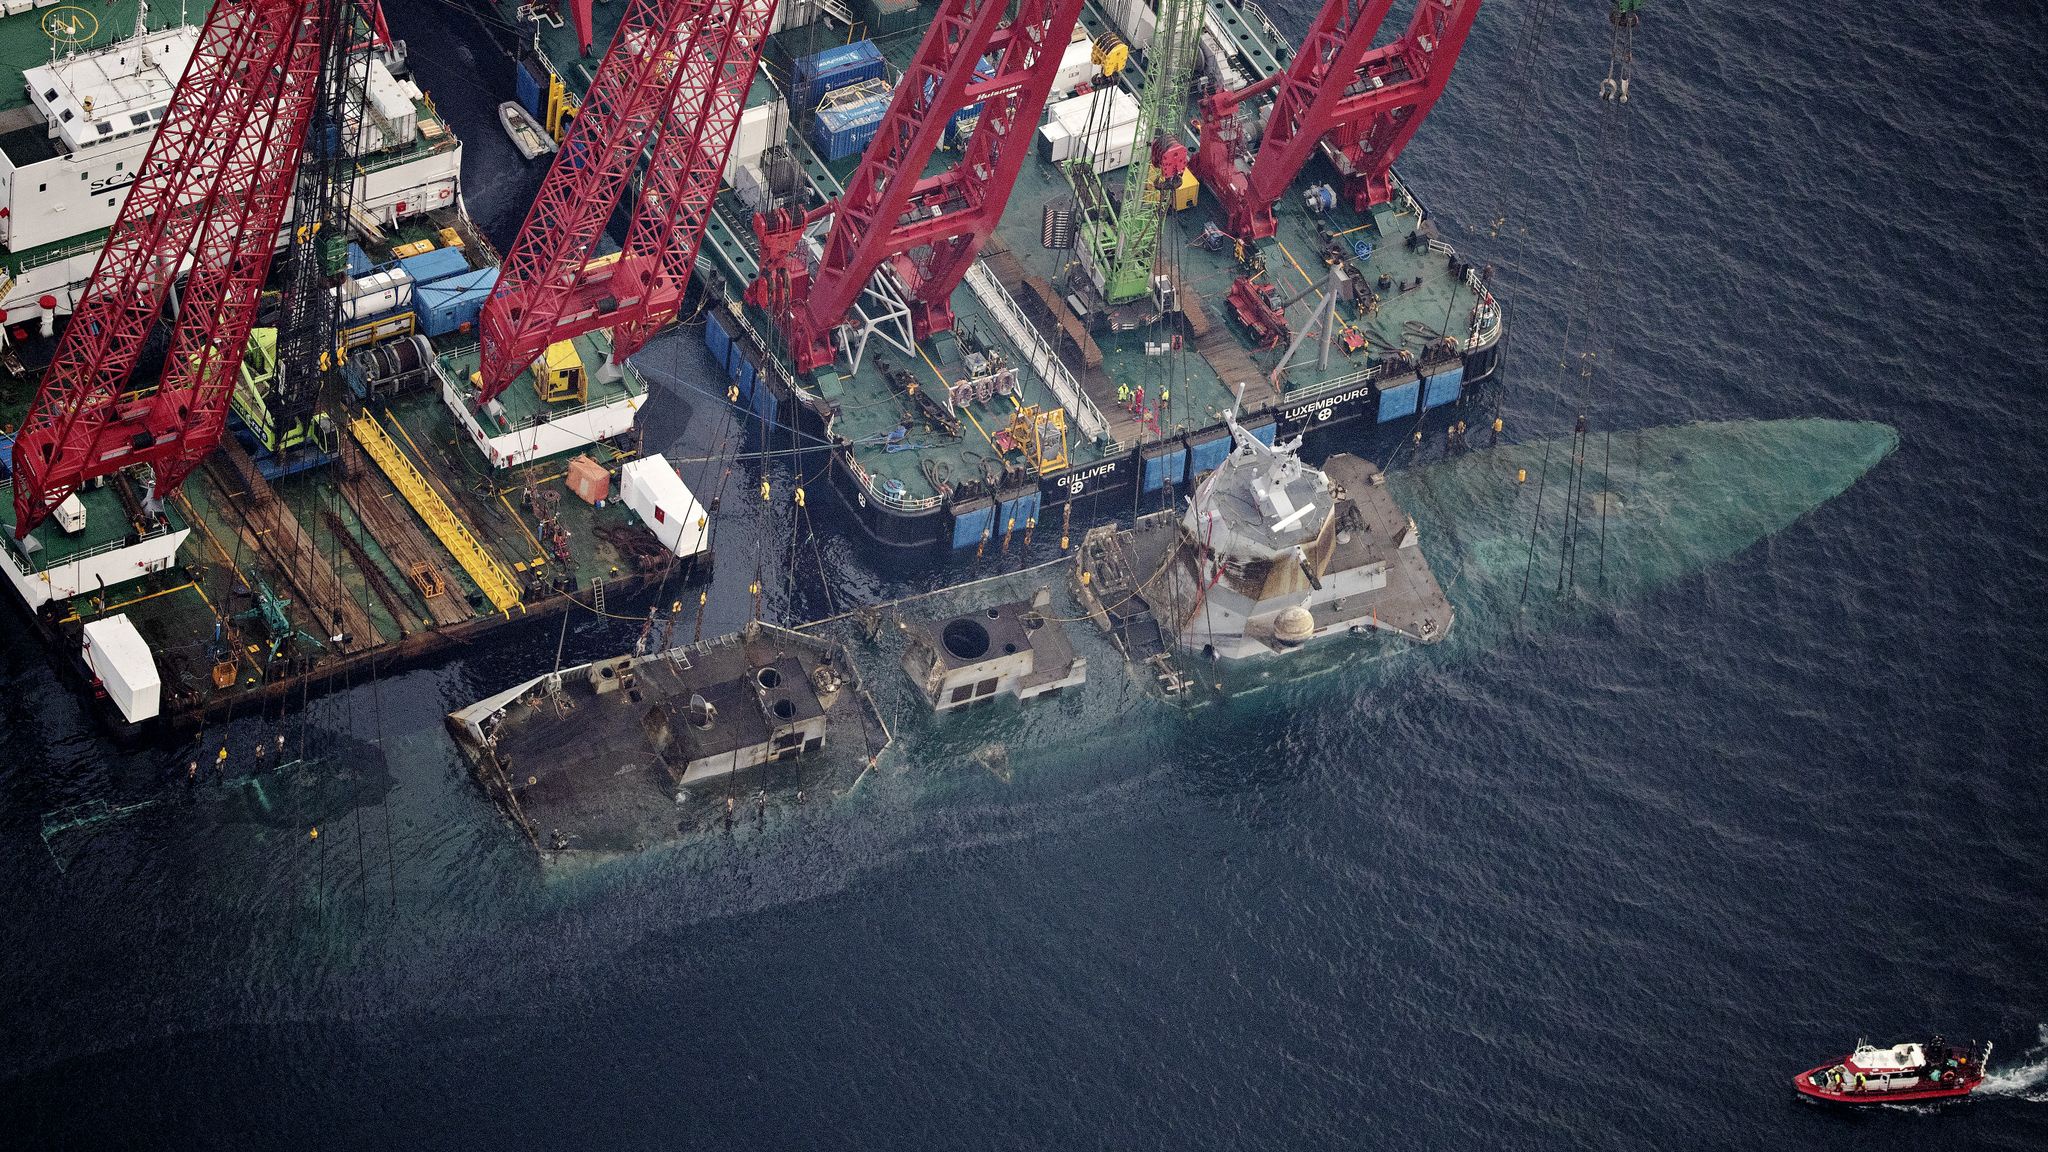 General 2048x1152 vehicle ship underwater cranes (machine) Norway military vehicle navy HNoMS Helge Ingstad